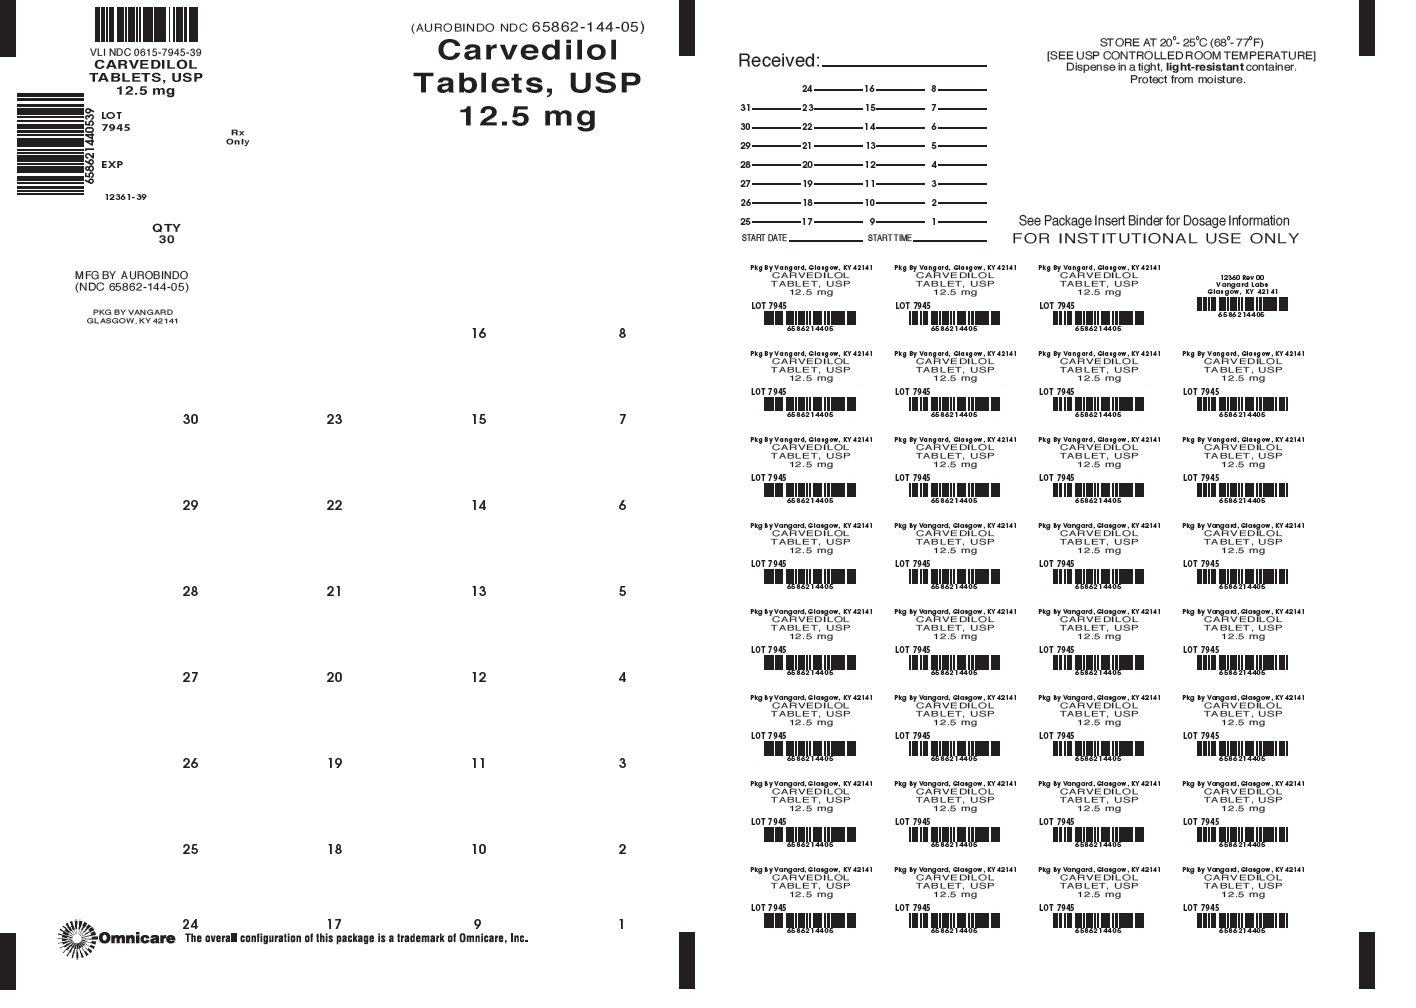 Carvedilol 12.5mg bingo card label